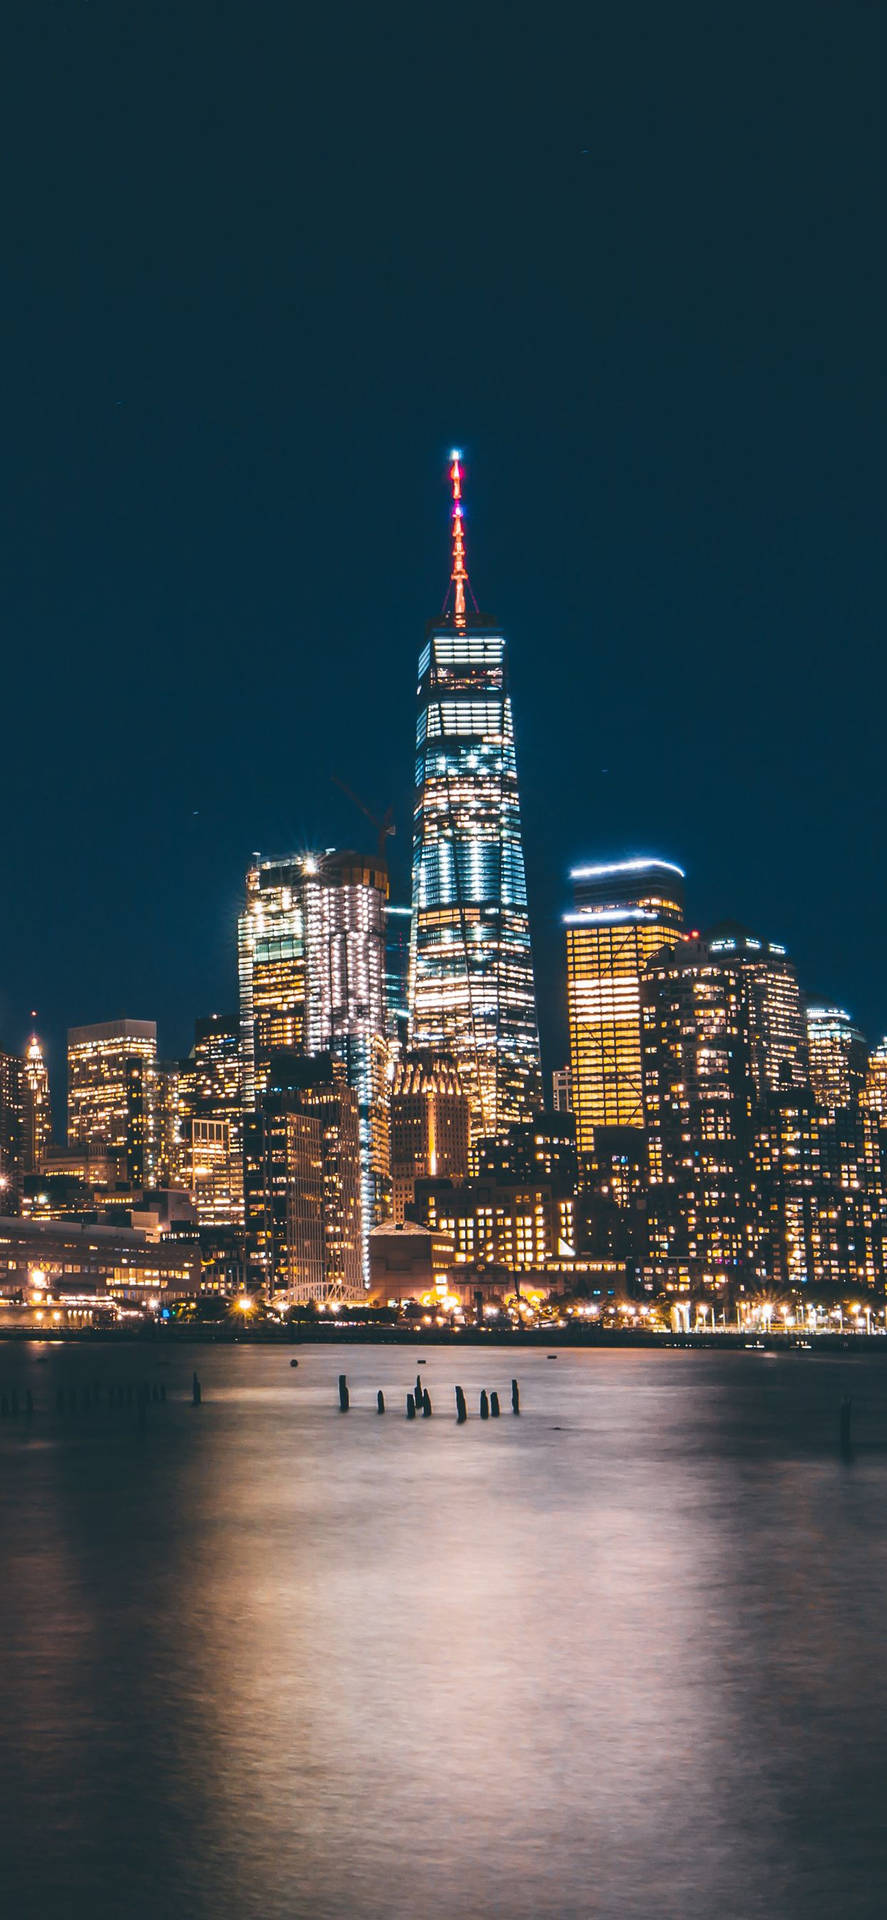 Enchanting View of New York Skyline at Night Wallpaper